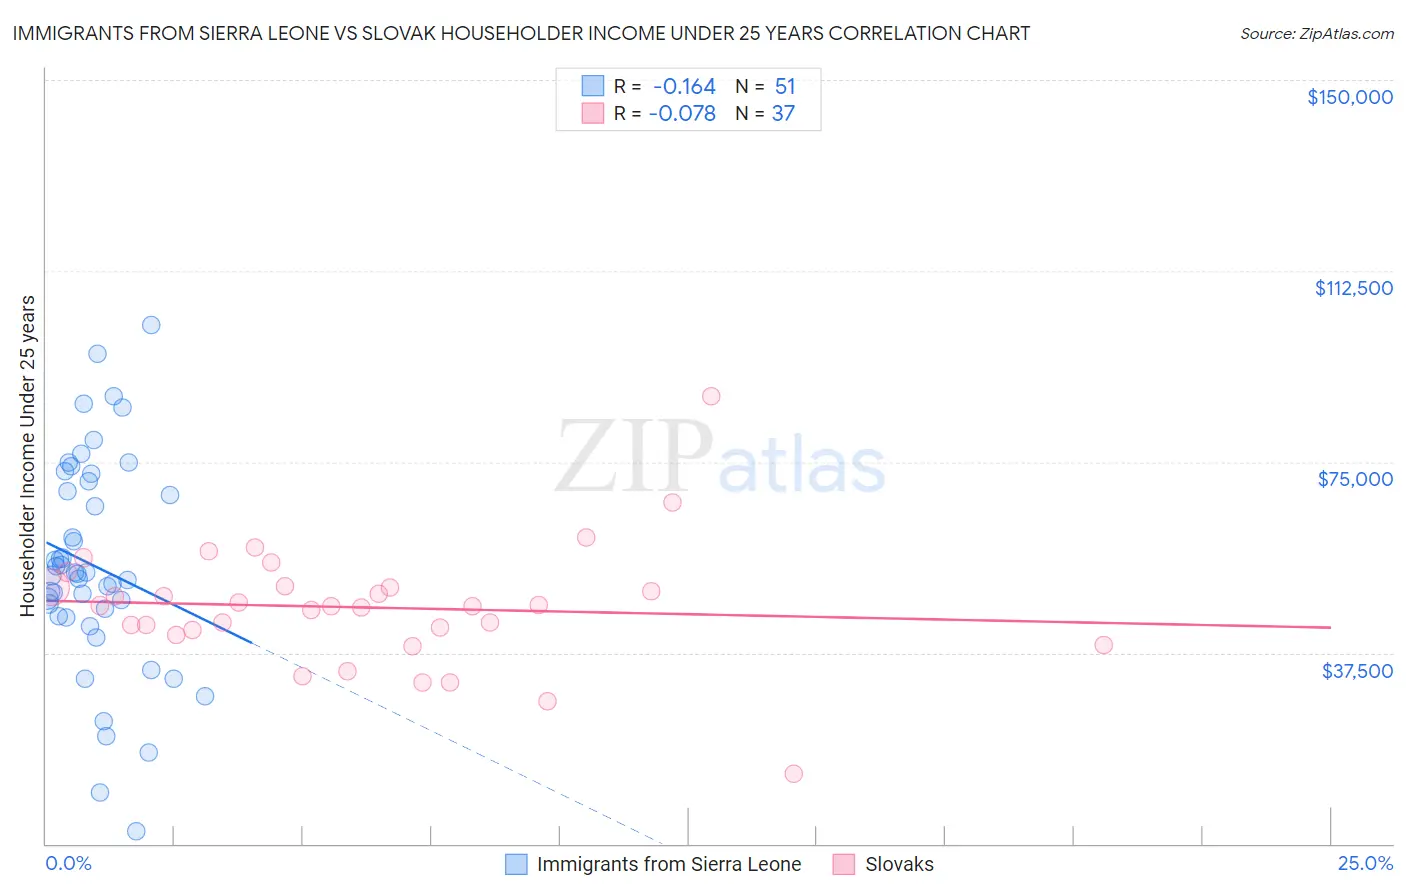 Immigrants from Sierra Leone vs Slovak Householder Income Under 25 years